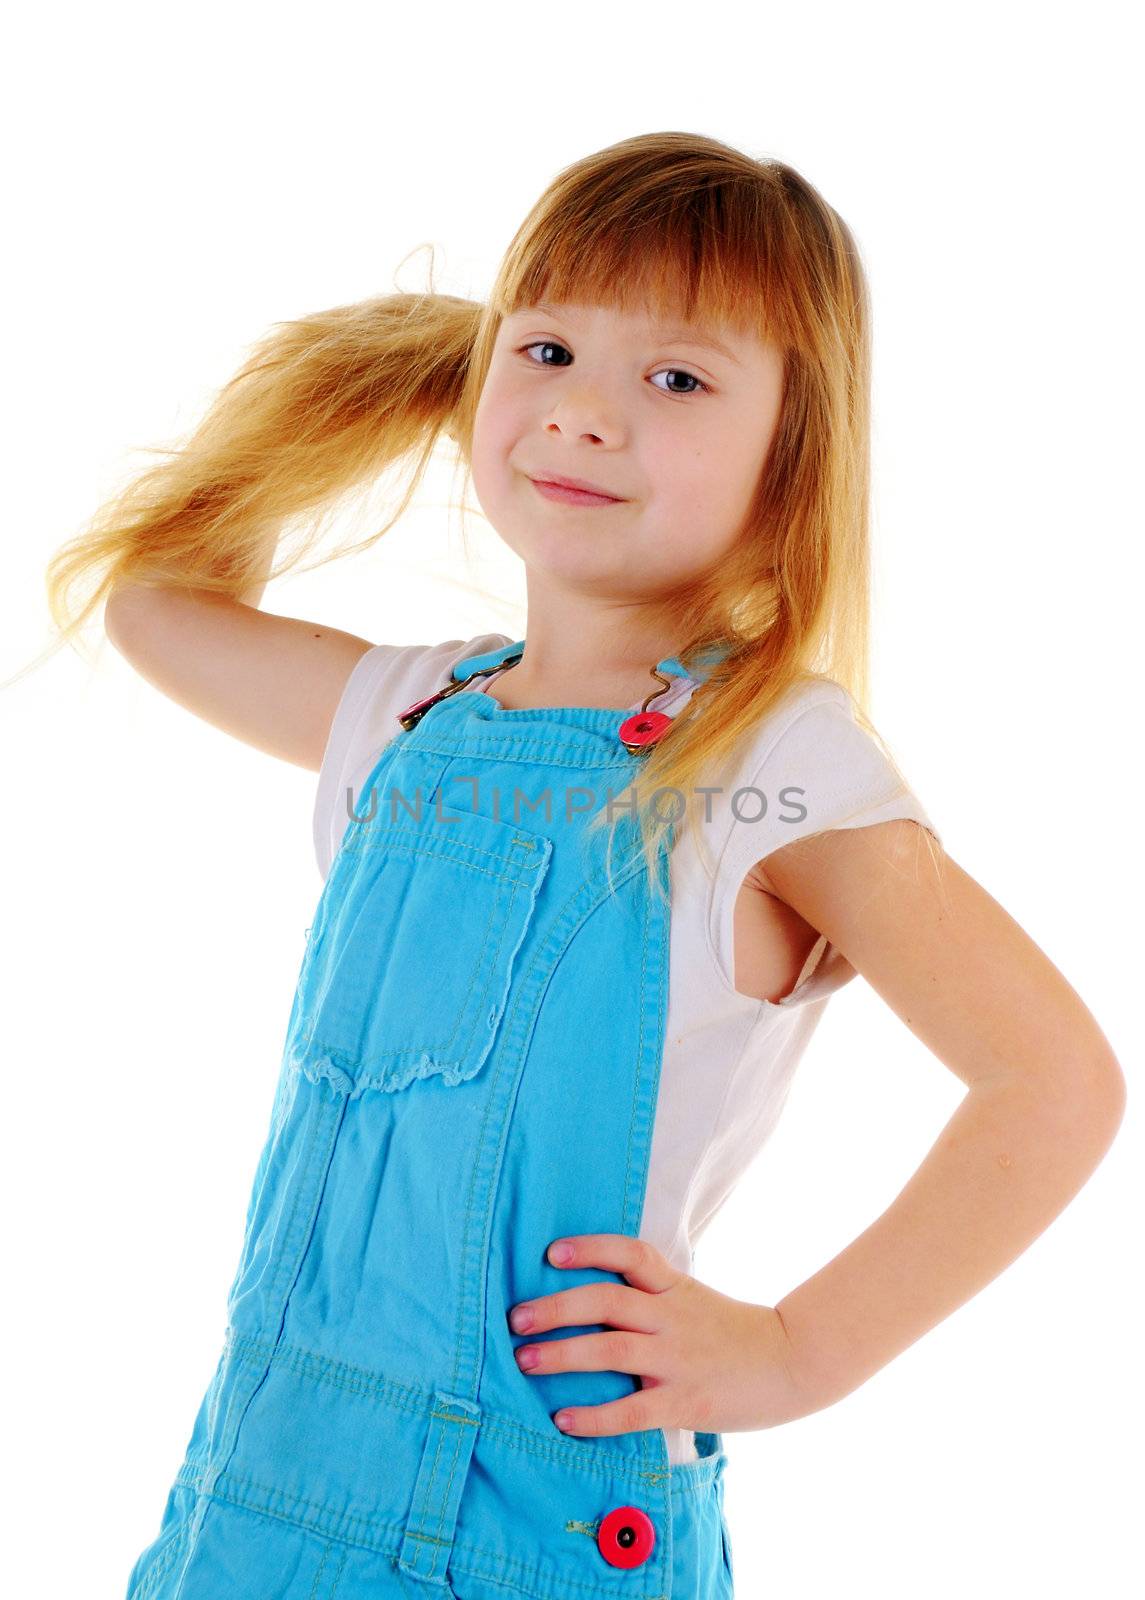 Small girl with long hair by iryna_rasko